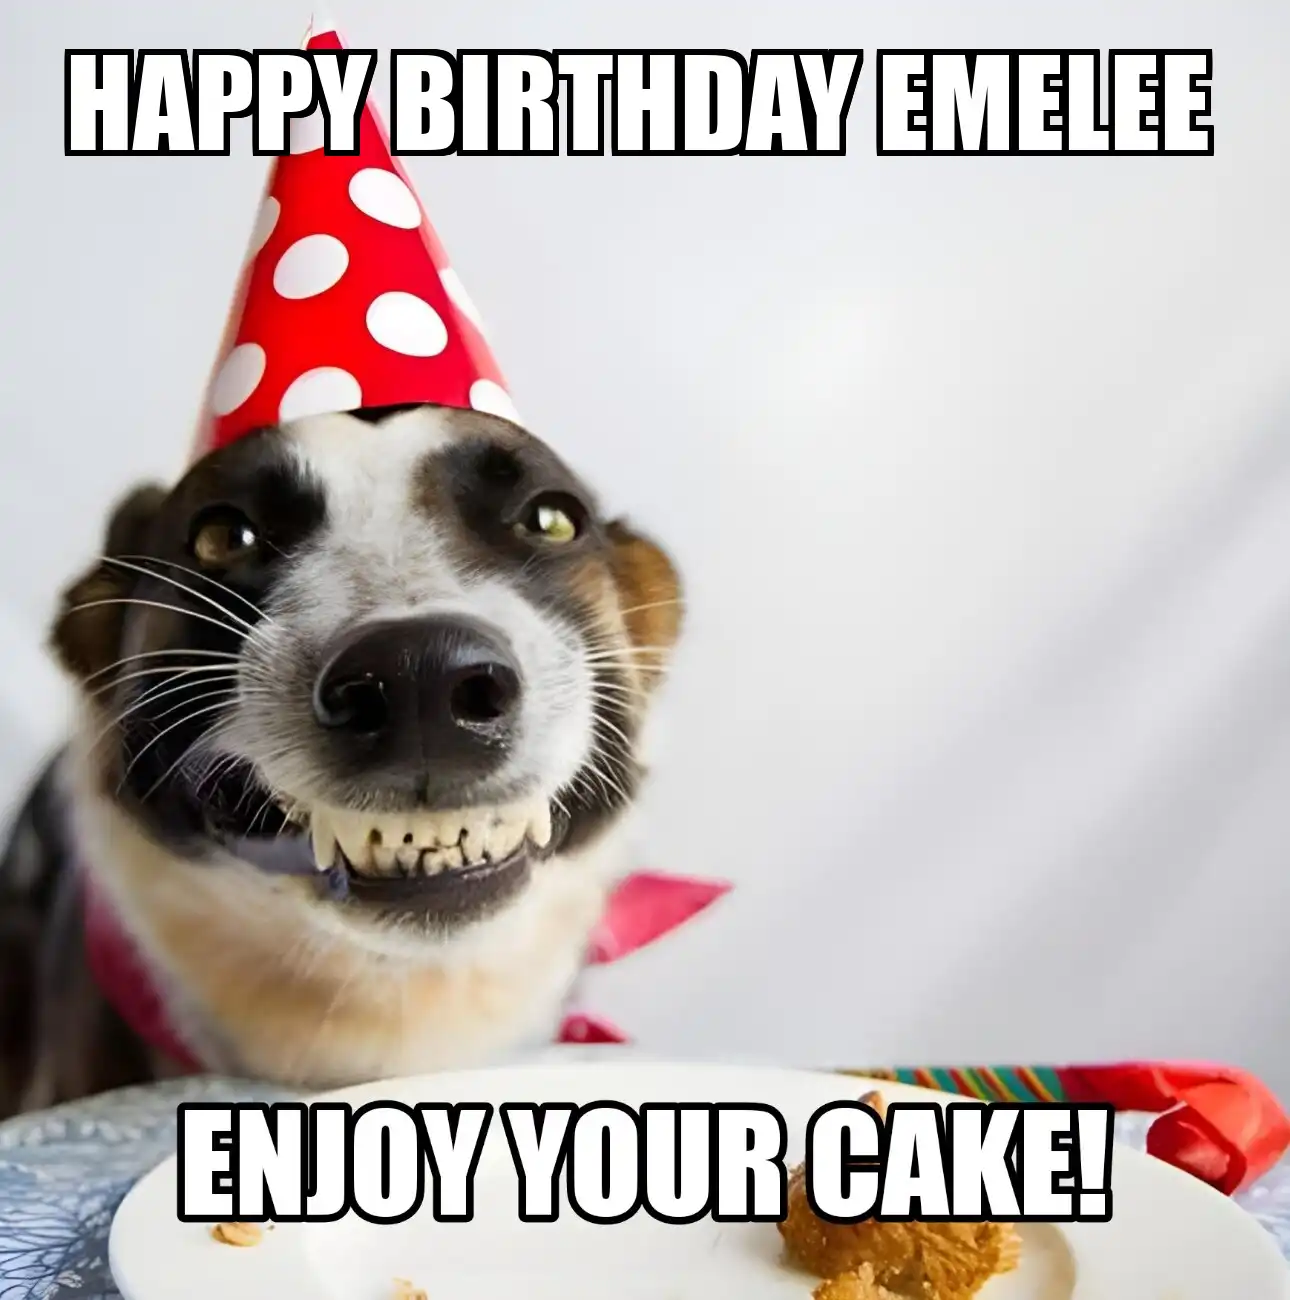 Happy Birthday Emelee Enjoy Your Cake Dog Meme